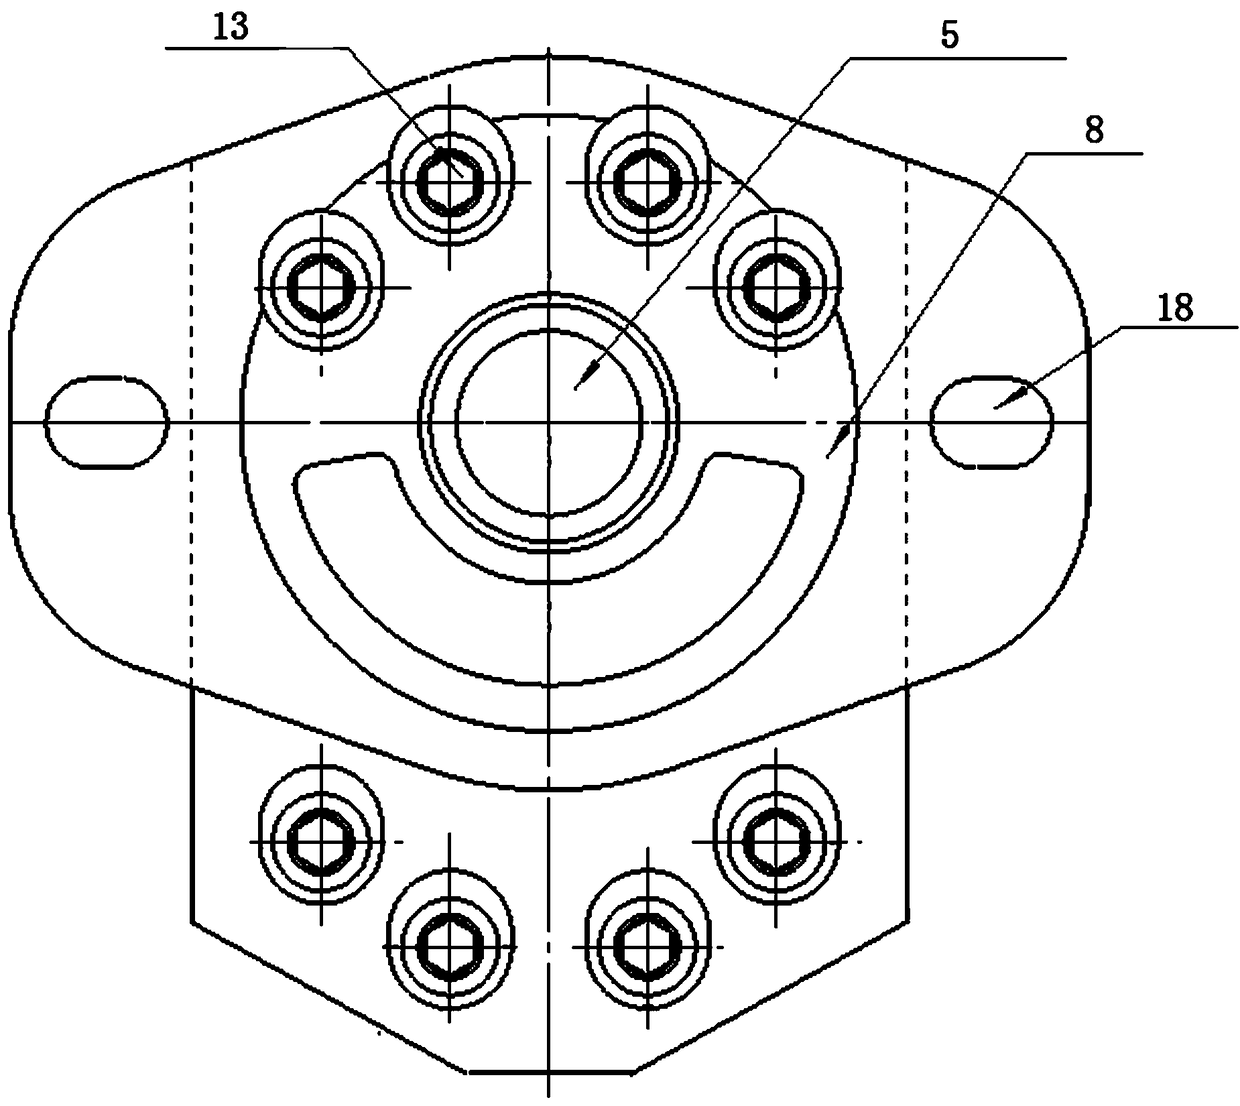 Coupling gear spiral rotor pump